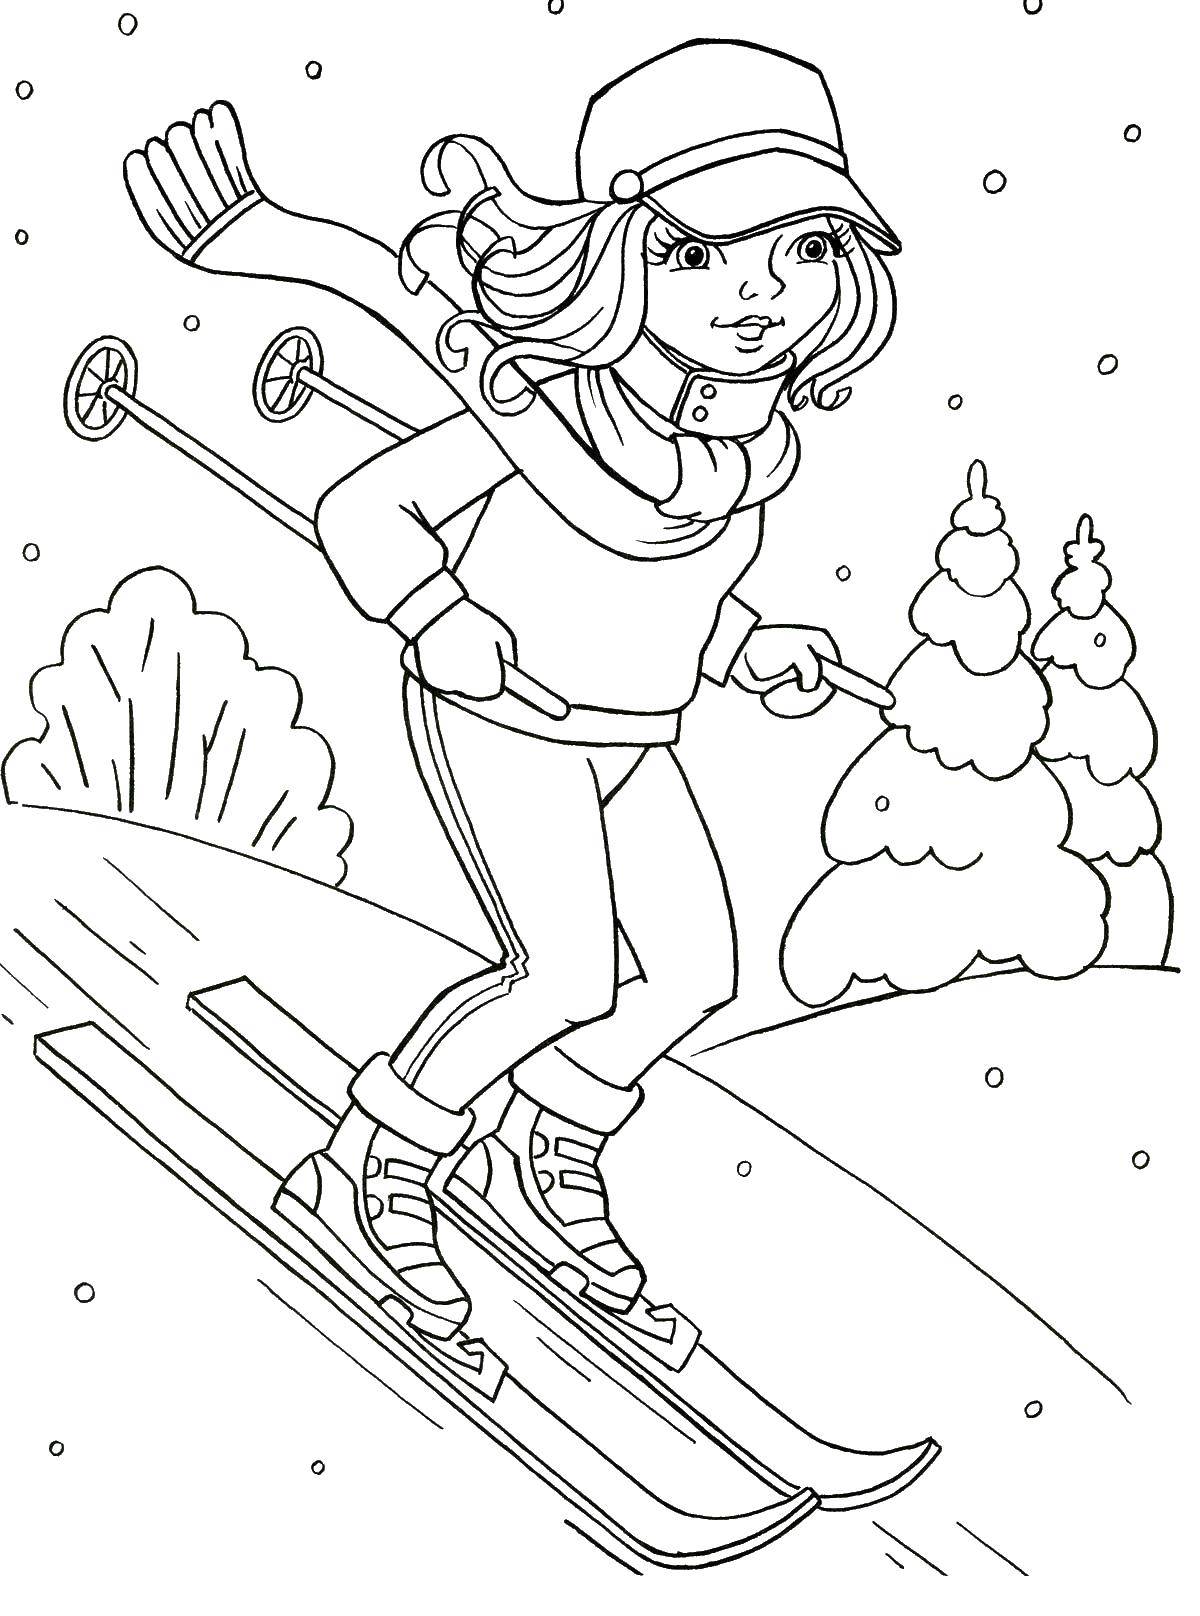 Coloring Girl on skis. Category winter. Tags:  girl , ski, snow, Christmas tree.